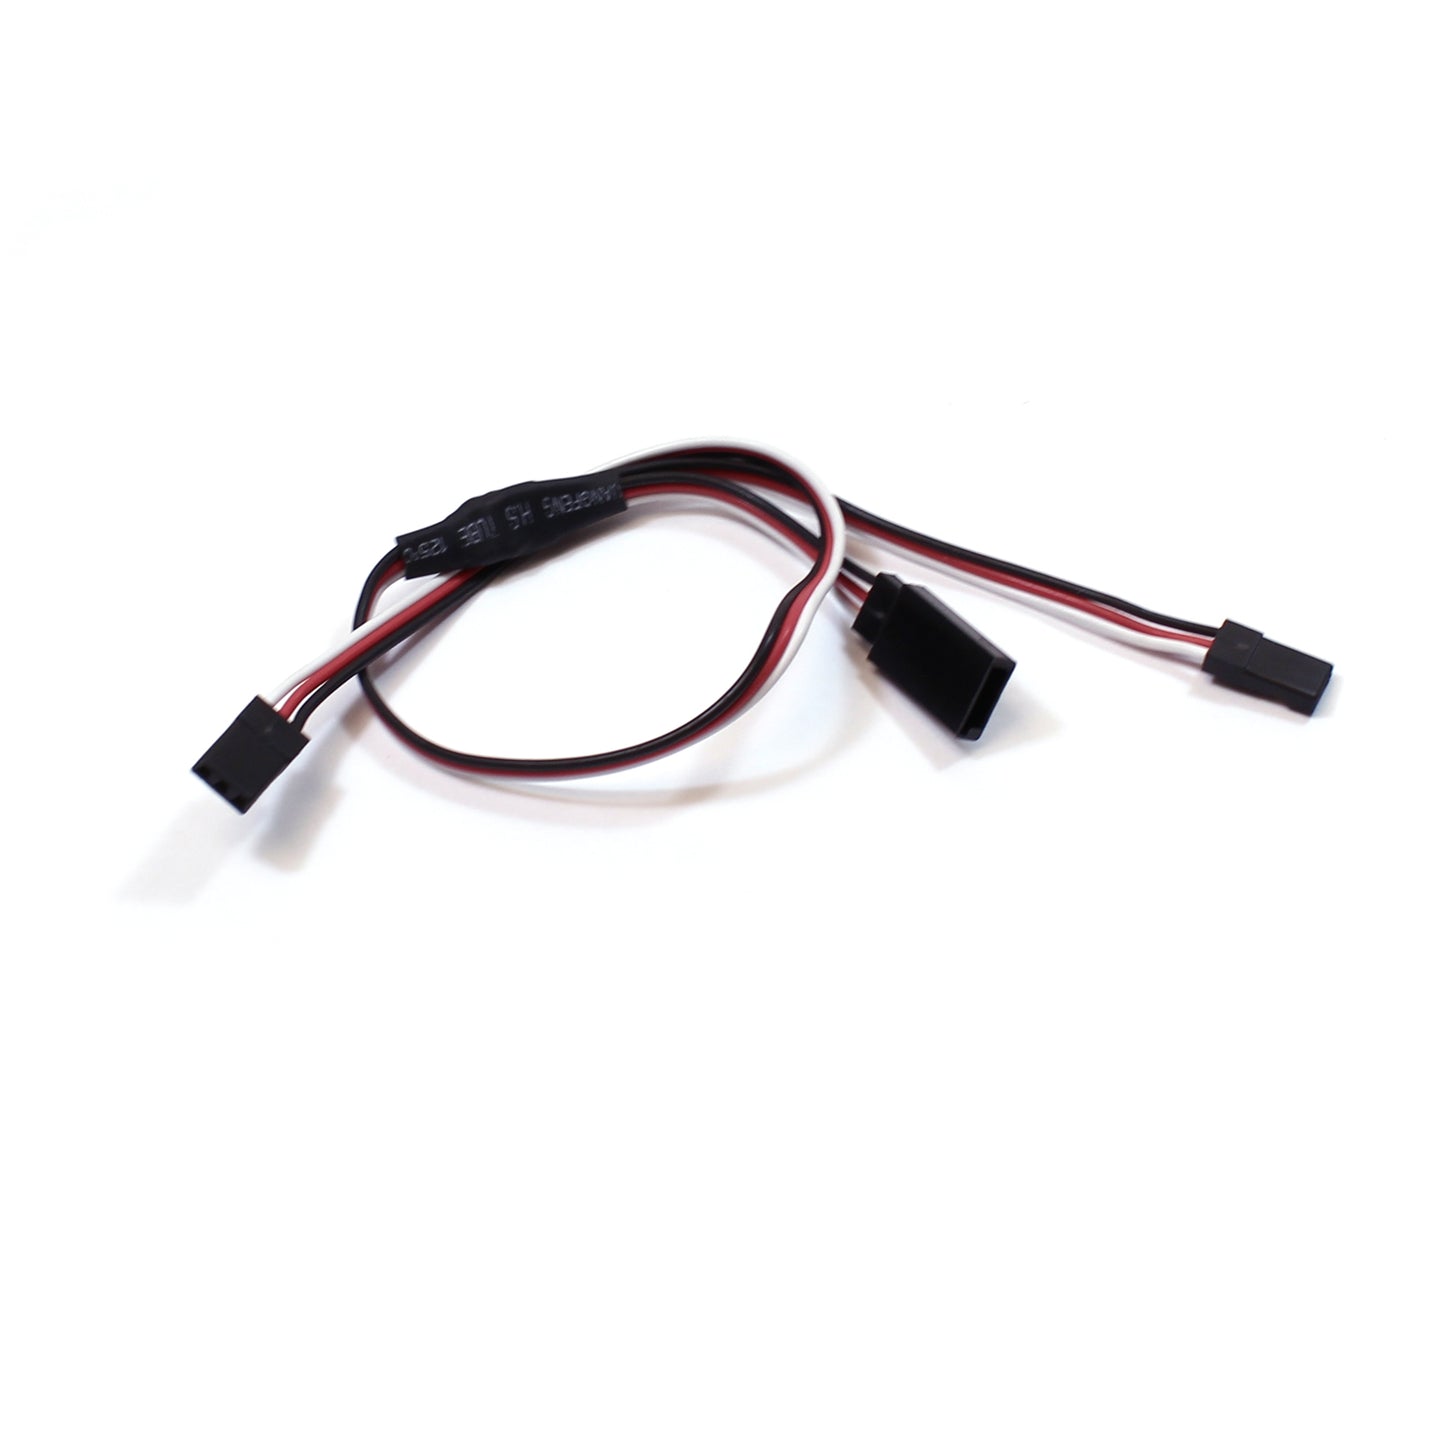 Y-Splitter Cable to Add Light Bar Kit to Servo Lead (Steering, ESC, Etc.)